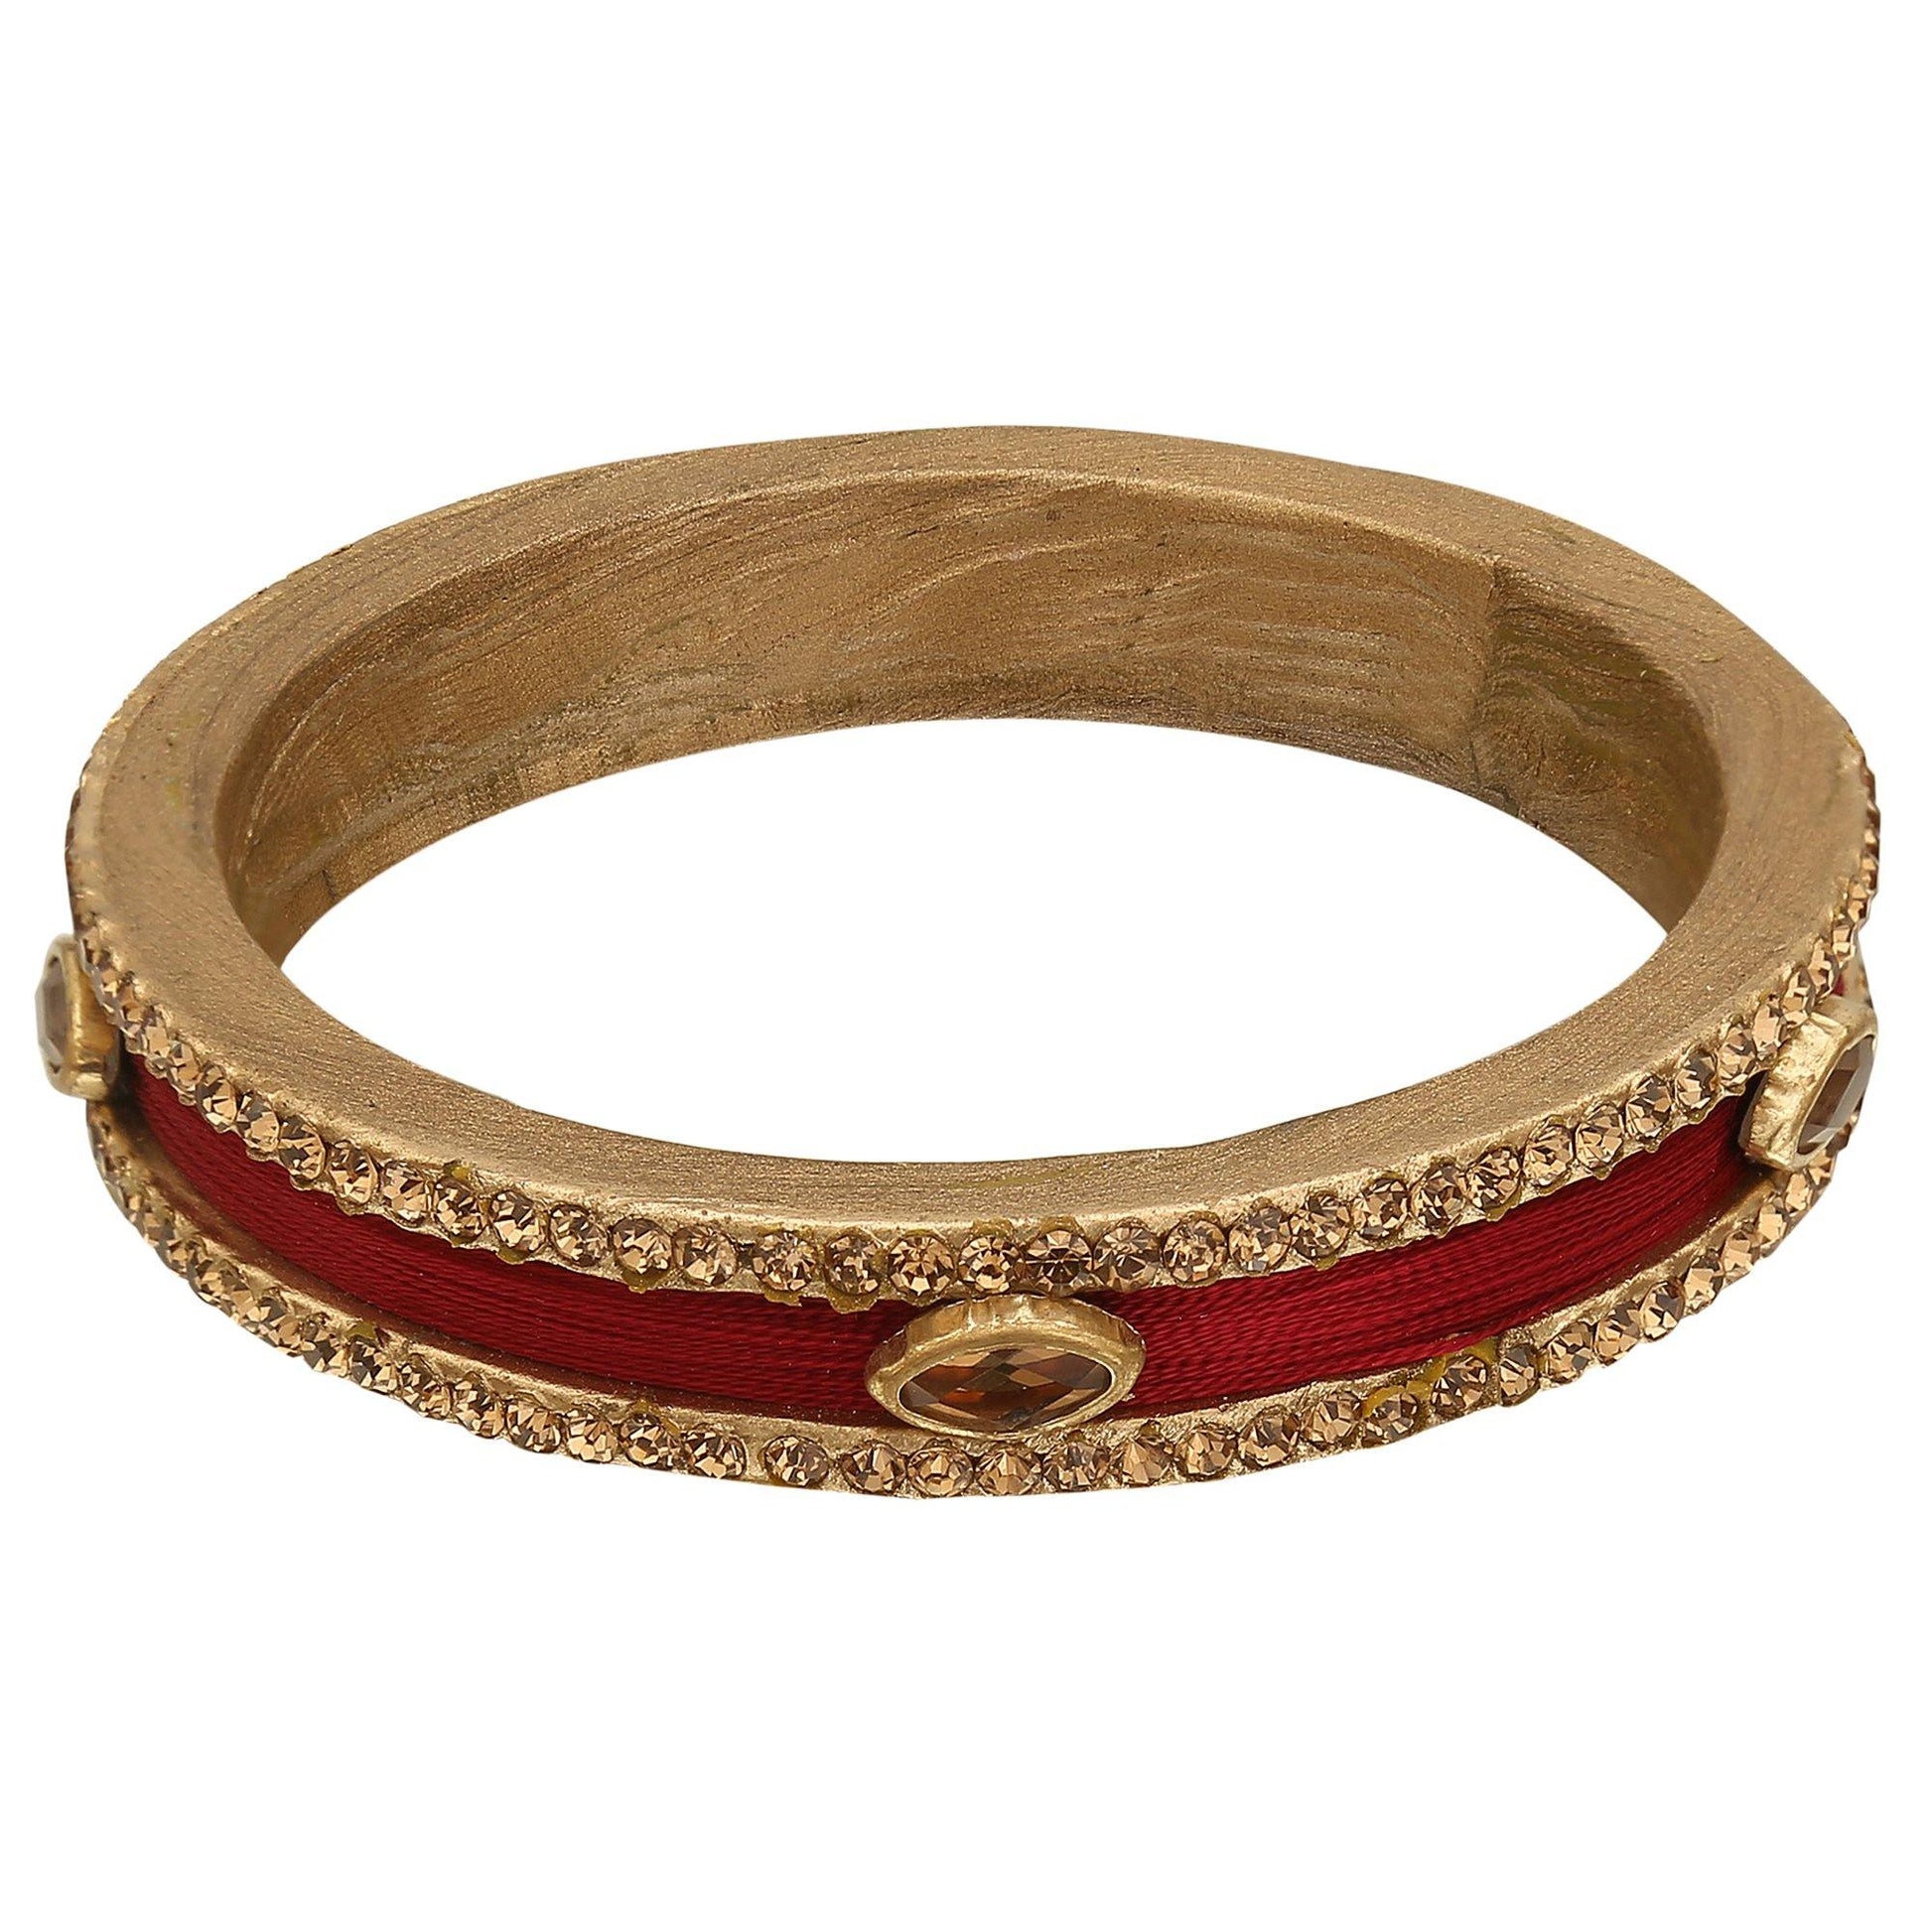 sukriti rajasthani wedding silk thread lac chuda maroon bangles bridal jewelry for women - set of 20